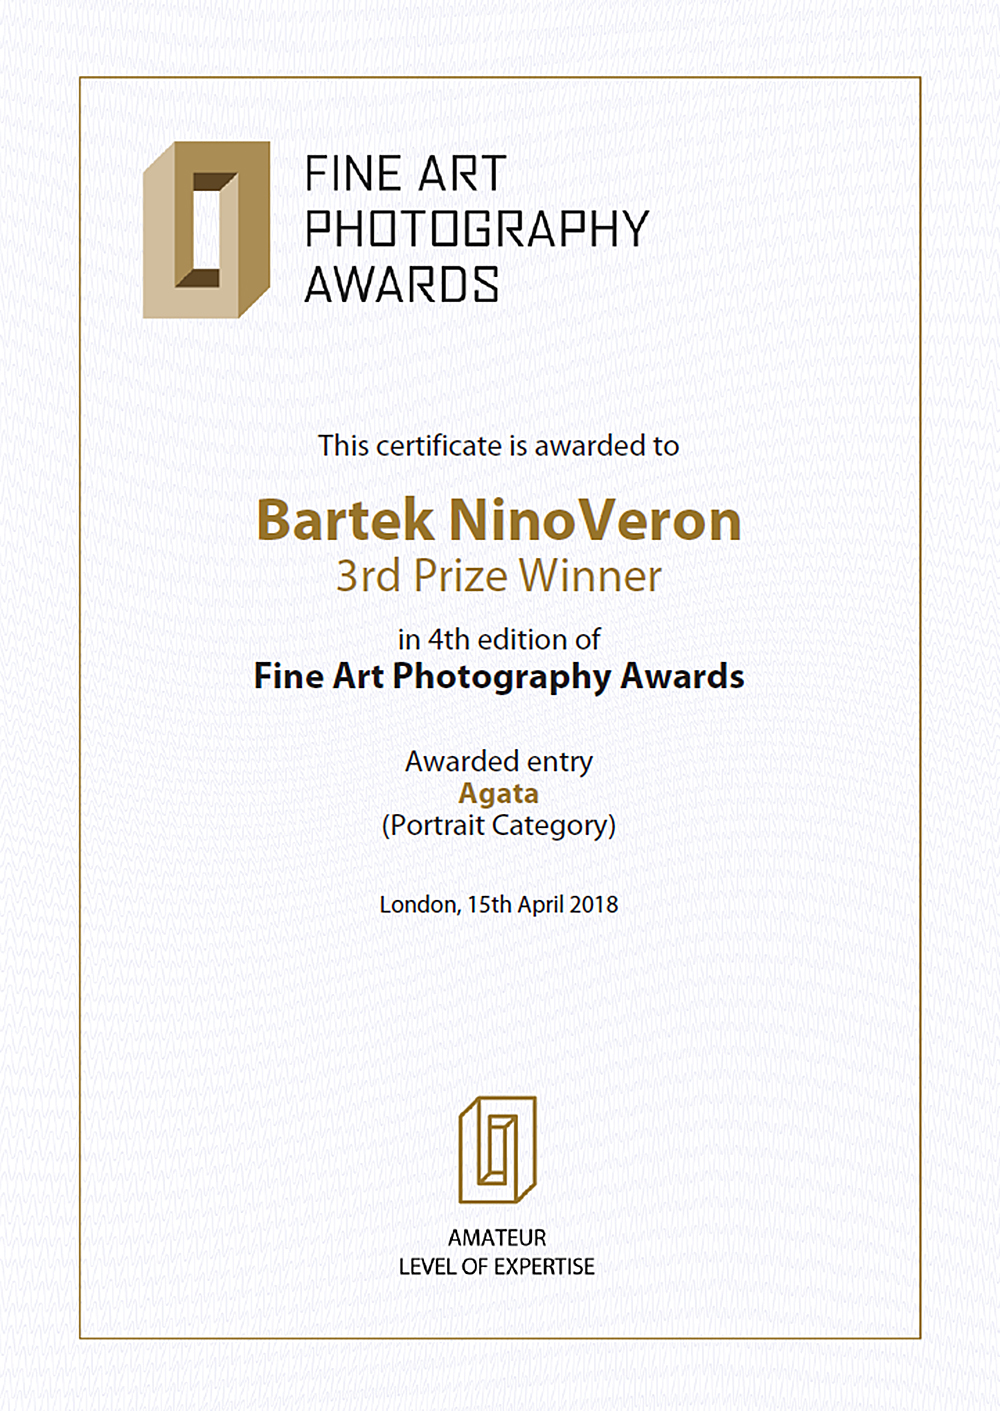 akt, nude, nagroda, konkurs, Fine Art Photography Awards, www.fineartphotoawards.com, ninoveron, Agata